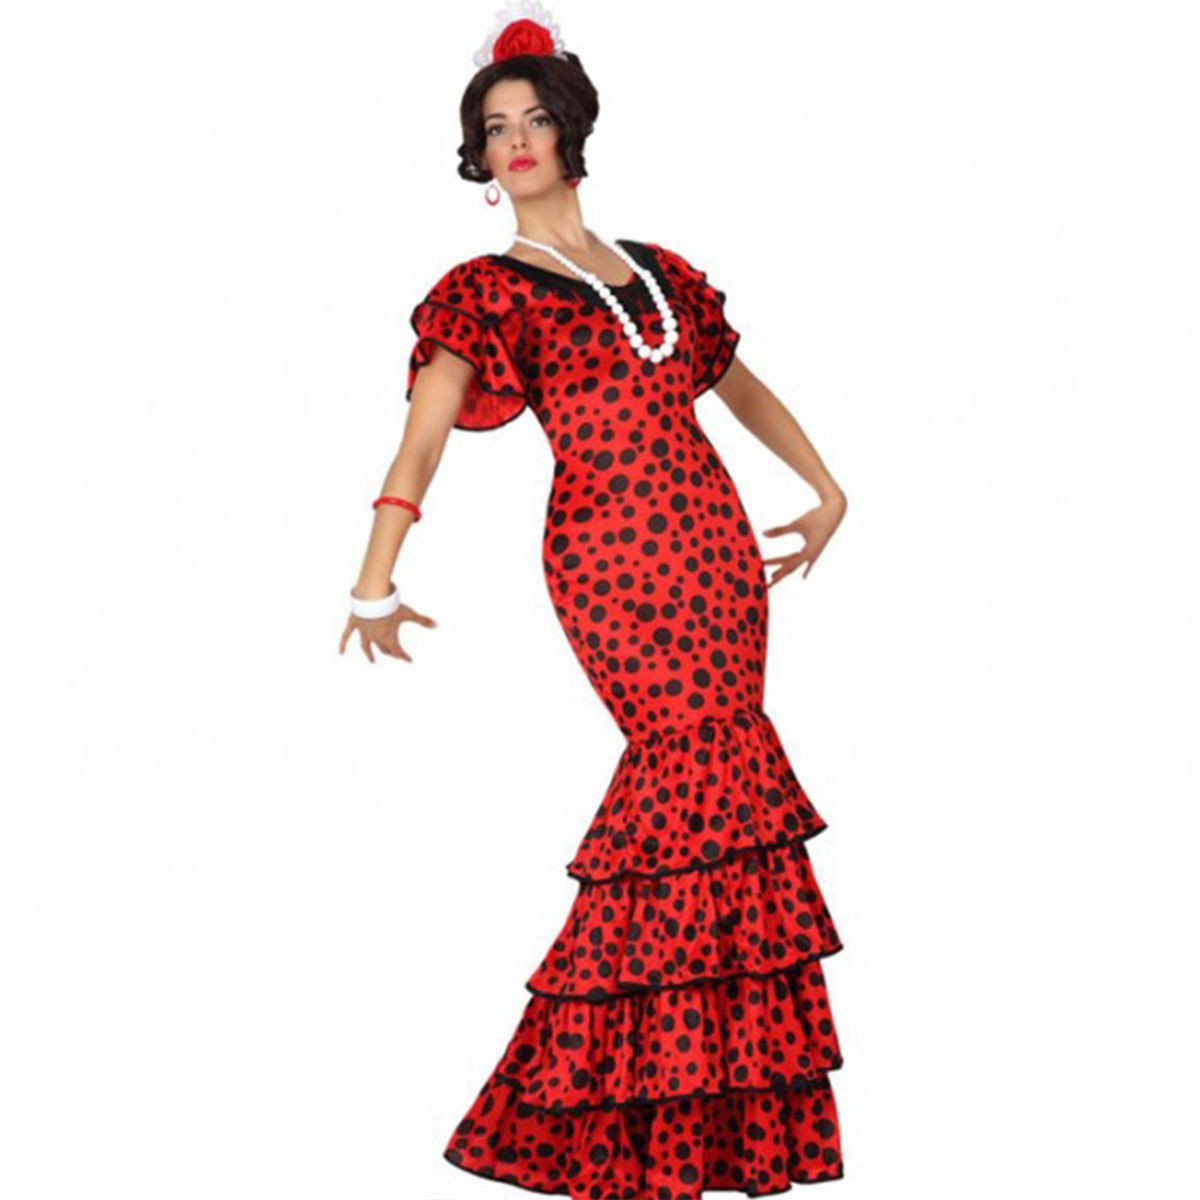 Costume Donna Flamenco Spagnola Tg 44/46